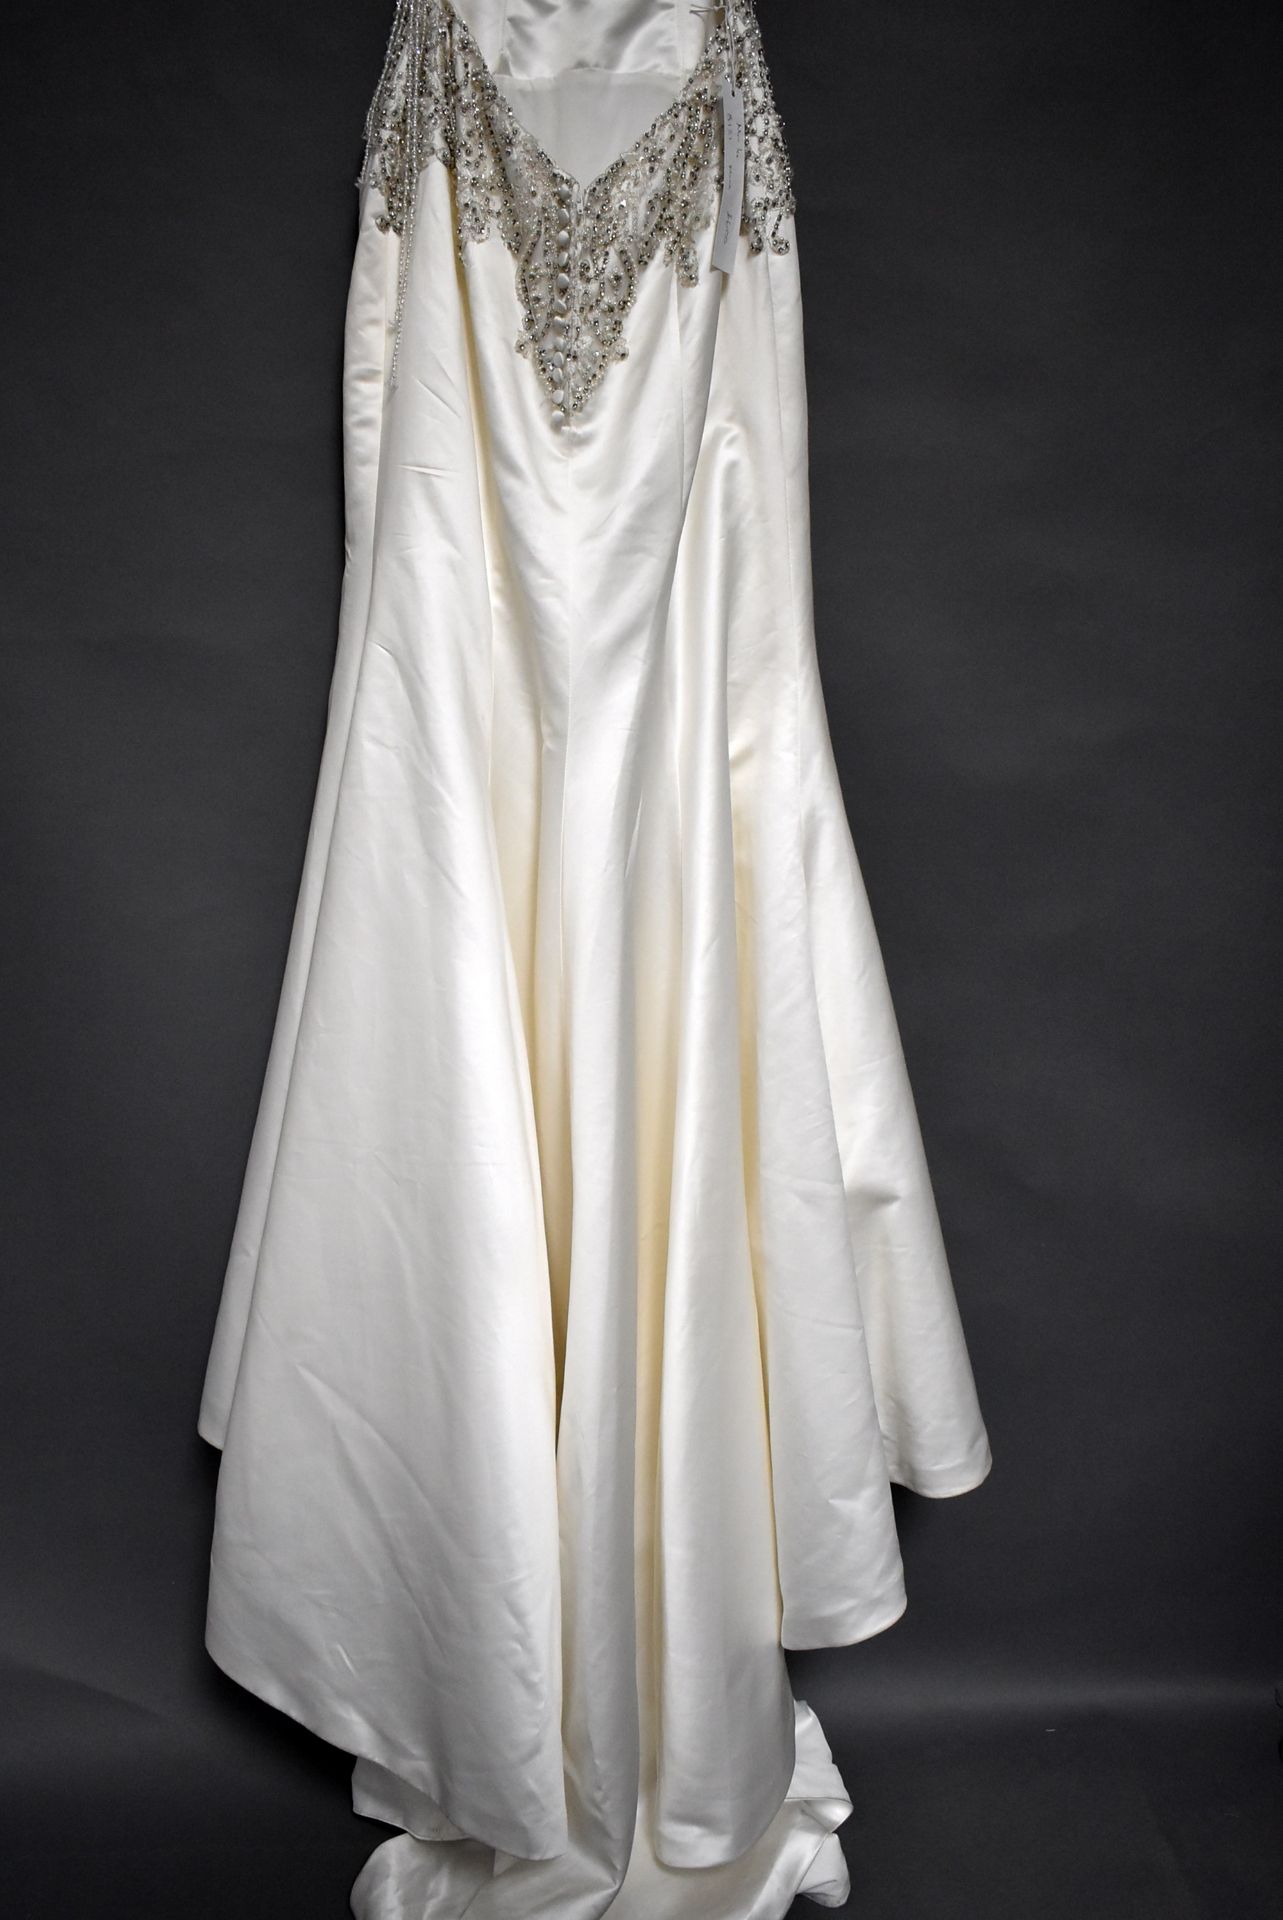 1 x MORI LEE Lace & Satin Beaded Bodice Fishtail Designer Wedding Dress Bridal Gown RRP £1,000 UK 12 - Image 4 of 6